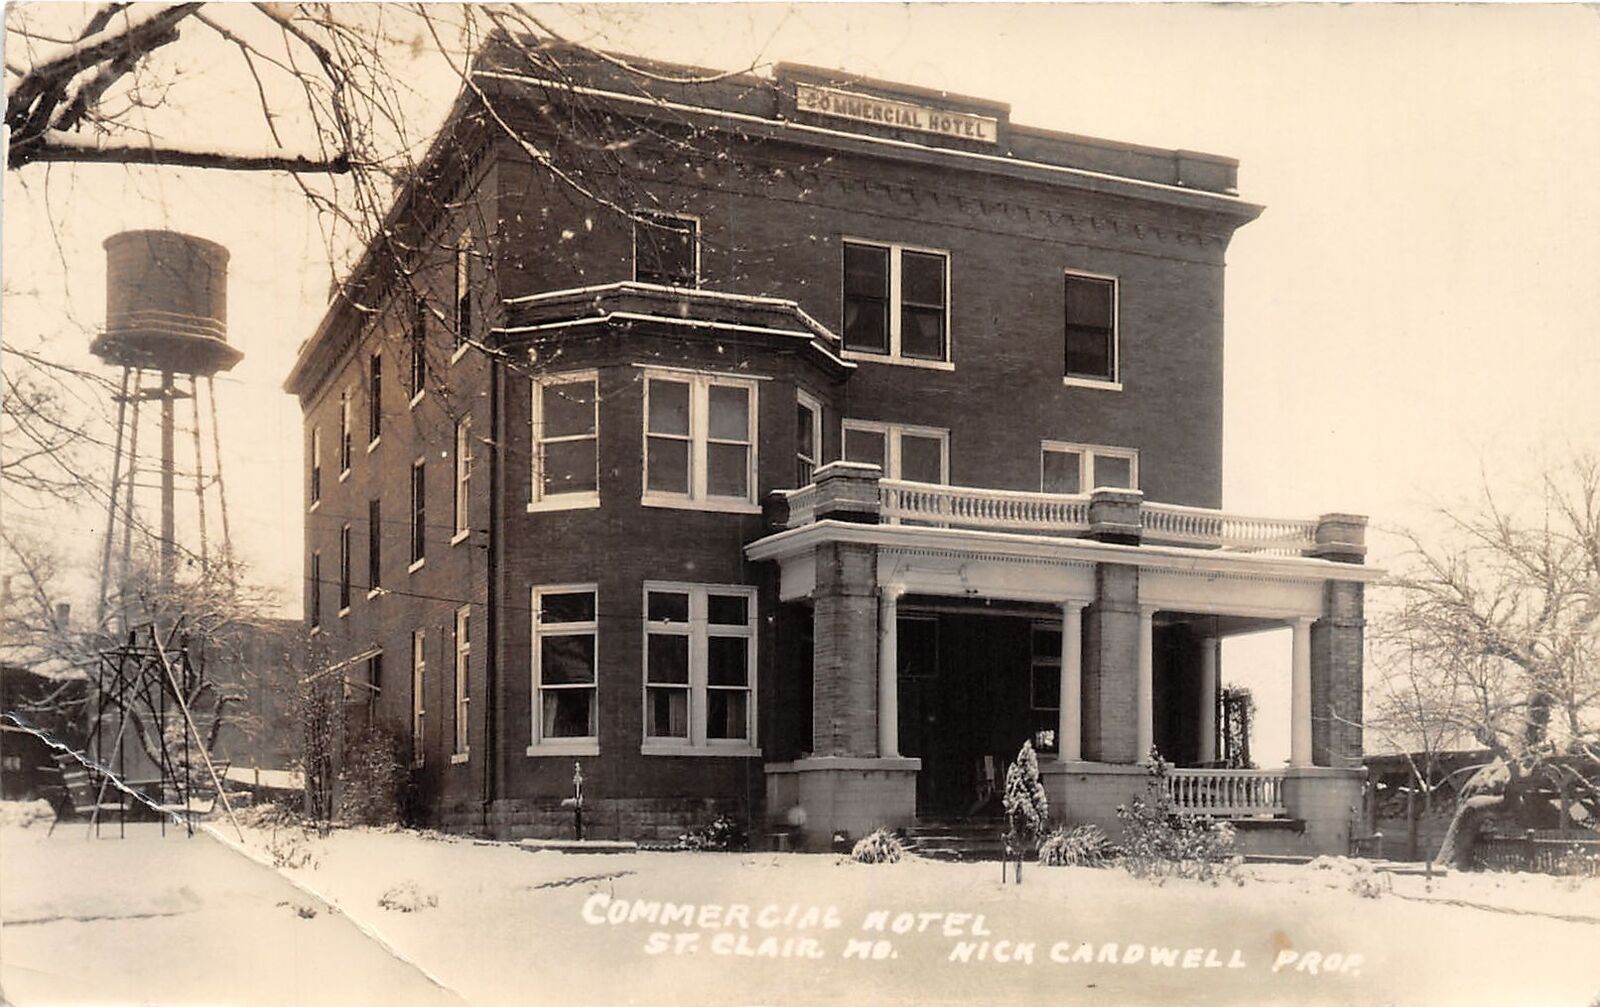 J42/ ST Clair Missouri RPPC Postcard c1930s Commercial Hotel Cardwell Prop. 120